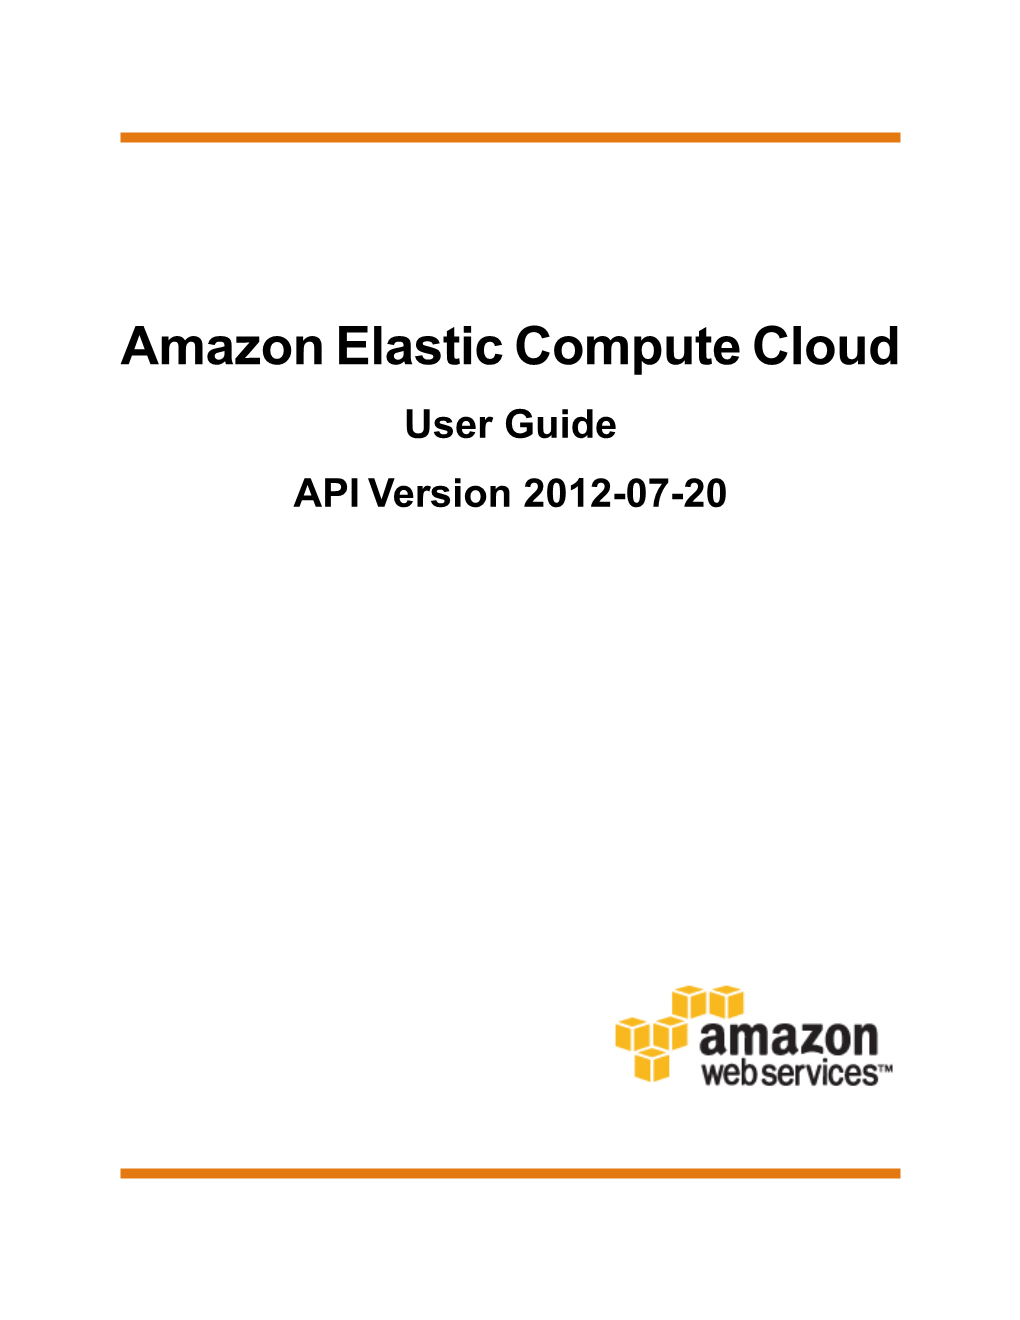 Amazon Elastic Compute Cloud User Guide API Version 2012-07-20 Amazon Elastic Compute Cloud User Guide